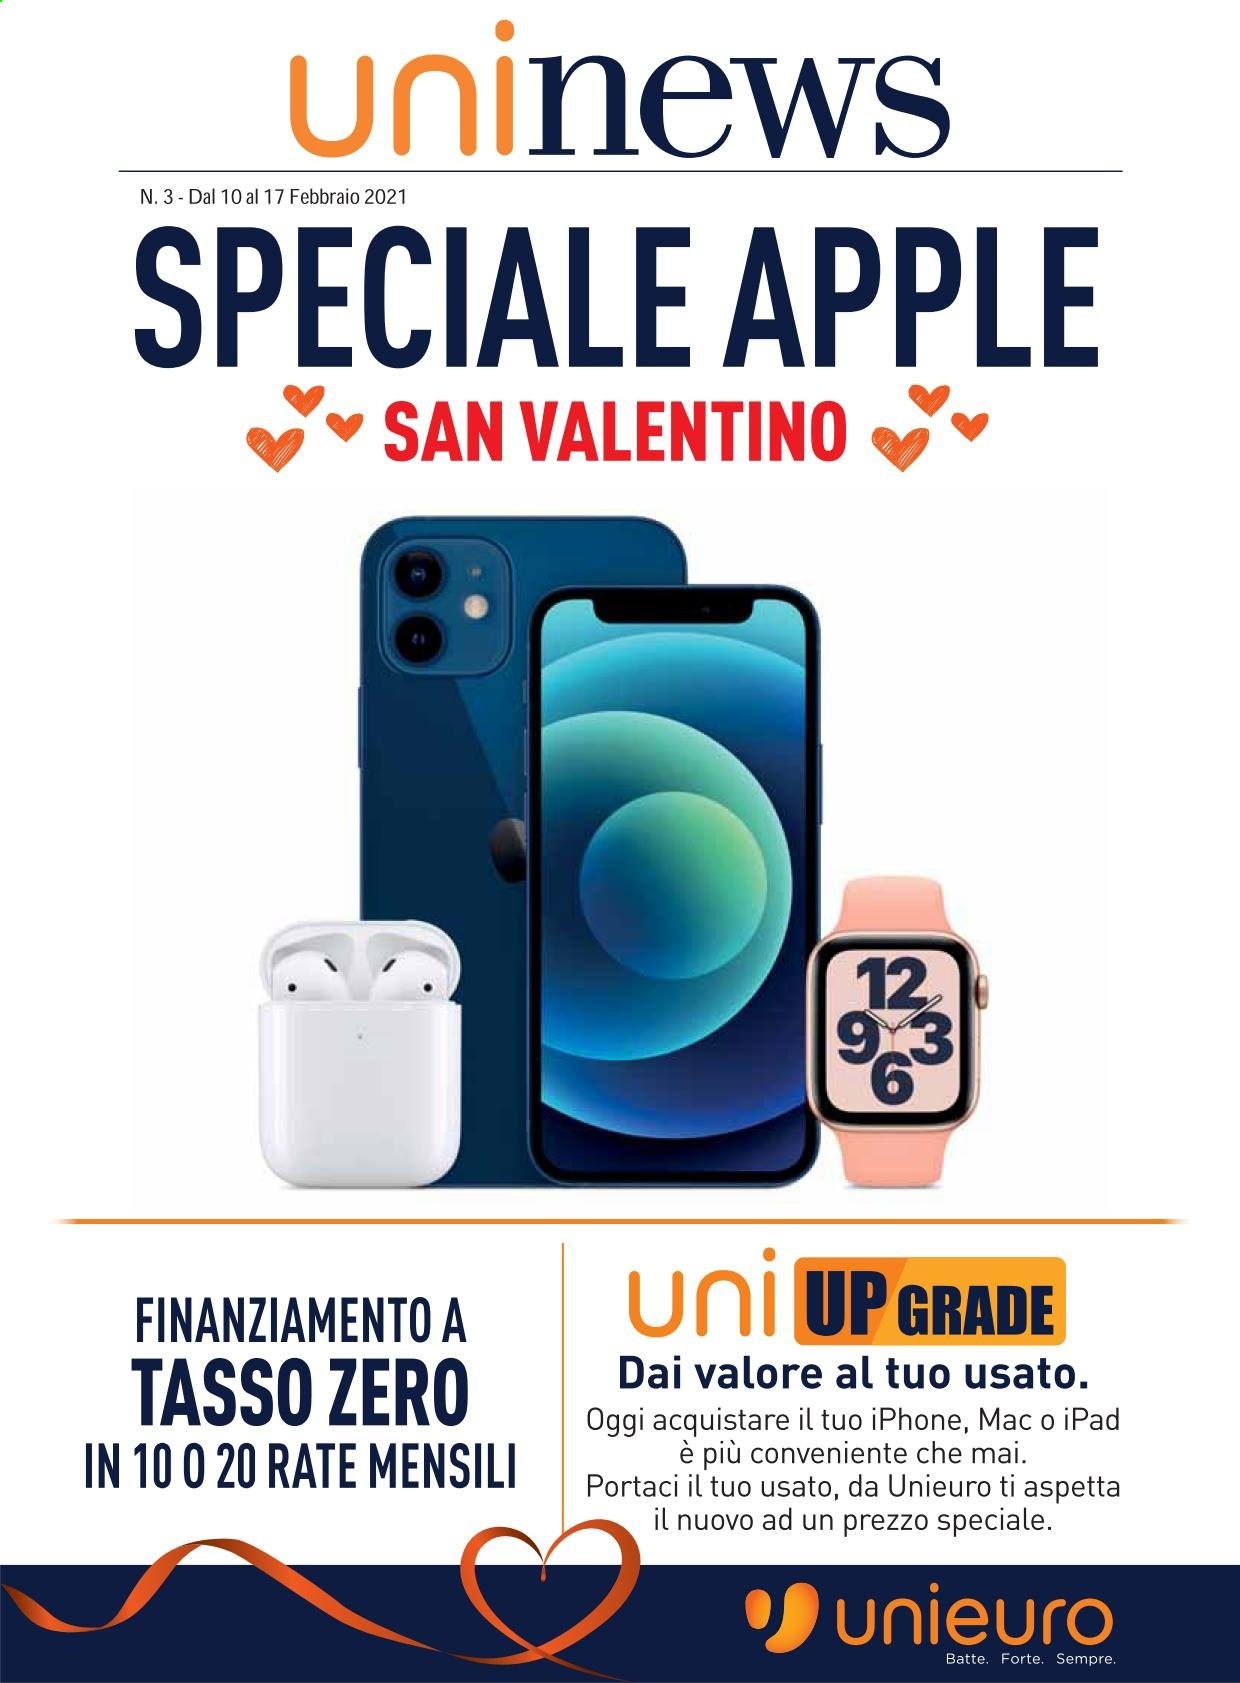 thumbnail - Volantino Unieuro - 10/2/2021 - 17/2/2021 - Prodotti in offerta - iPad, iPhone. Pagina 1.